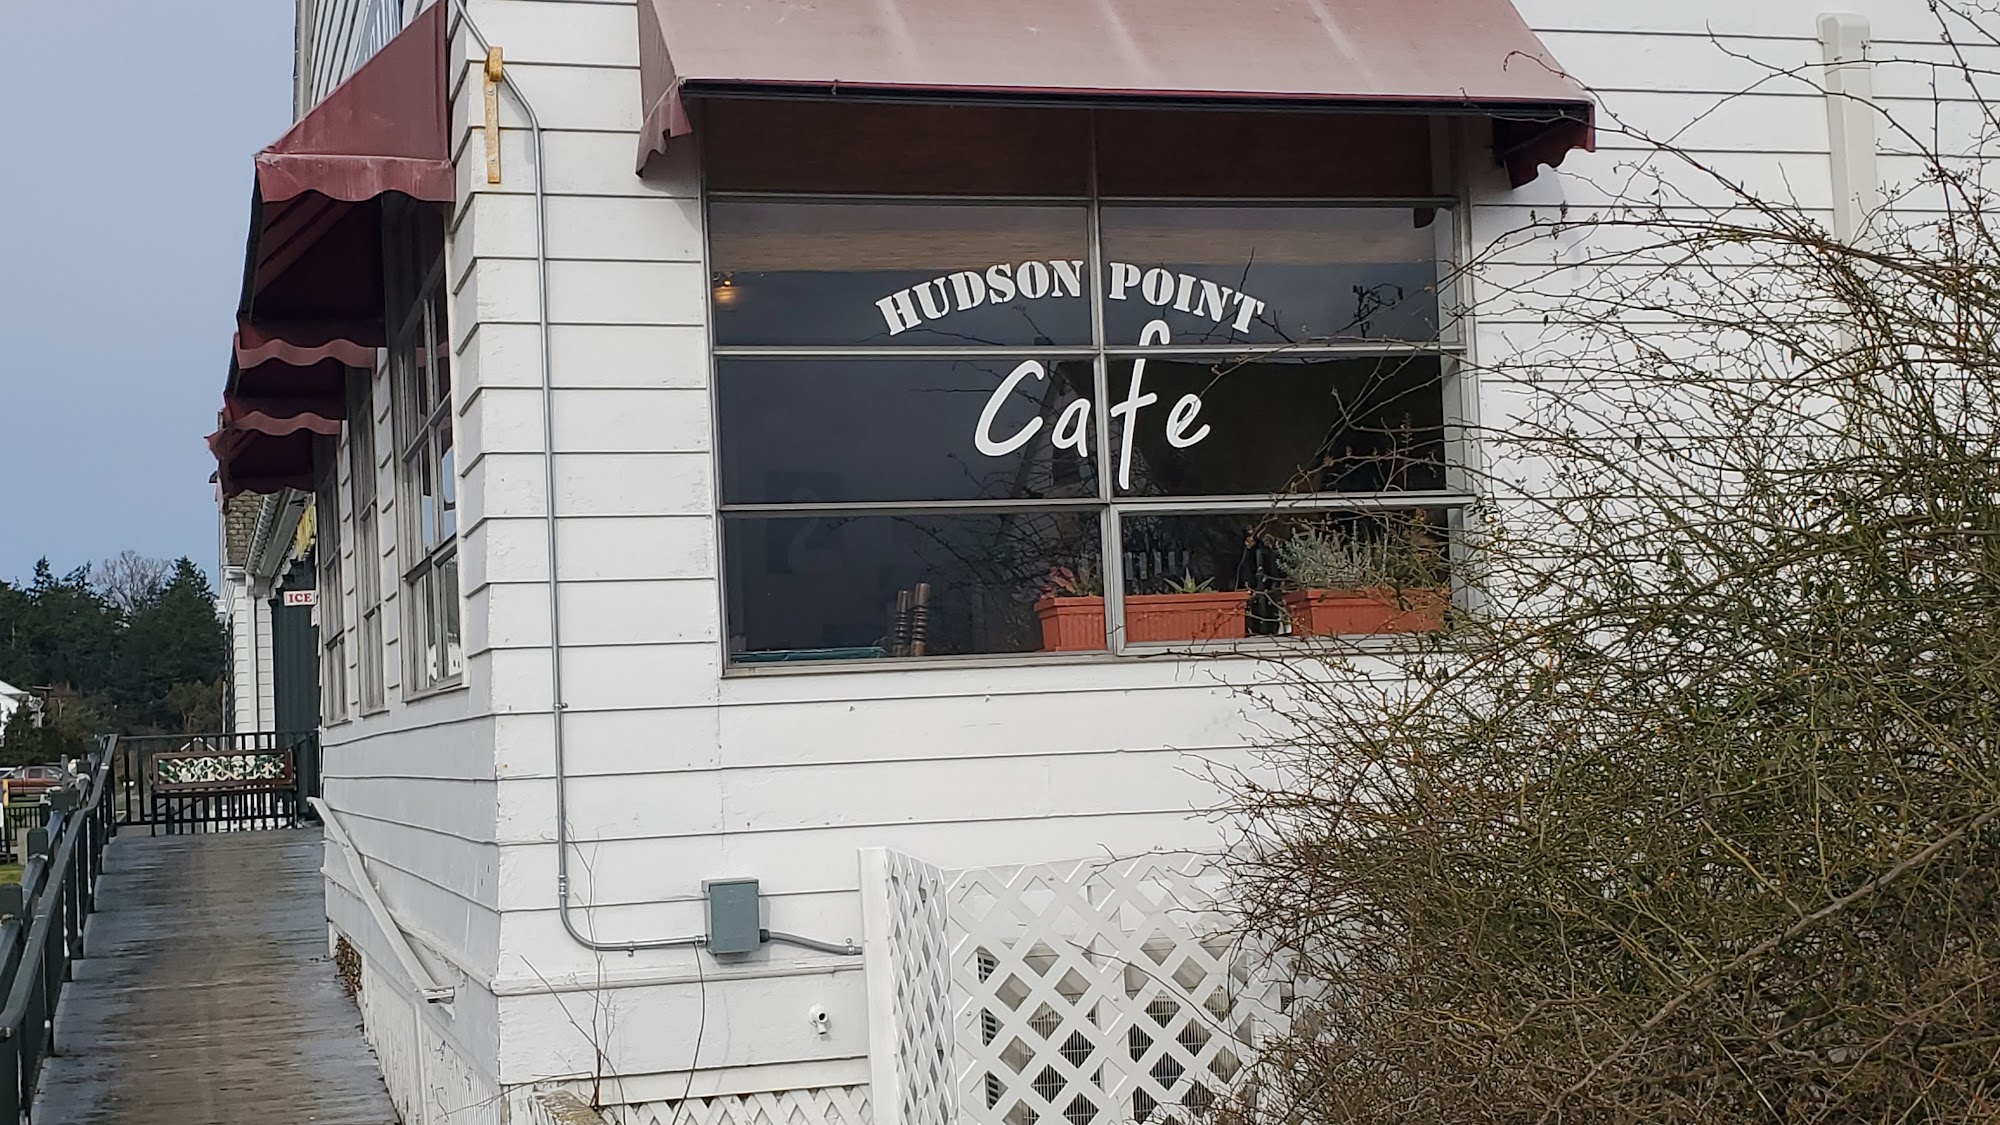 Hudson Point Café